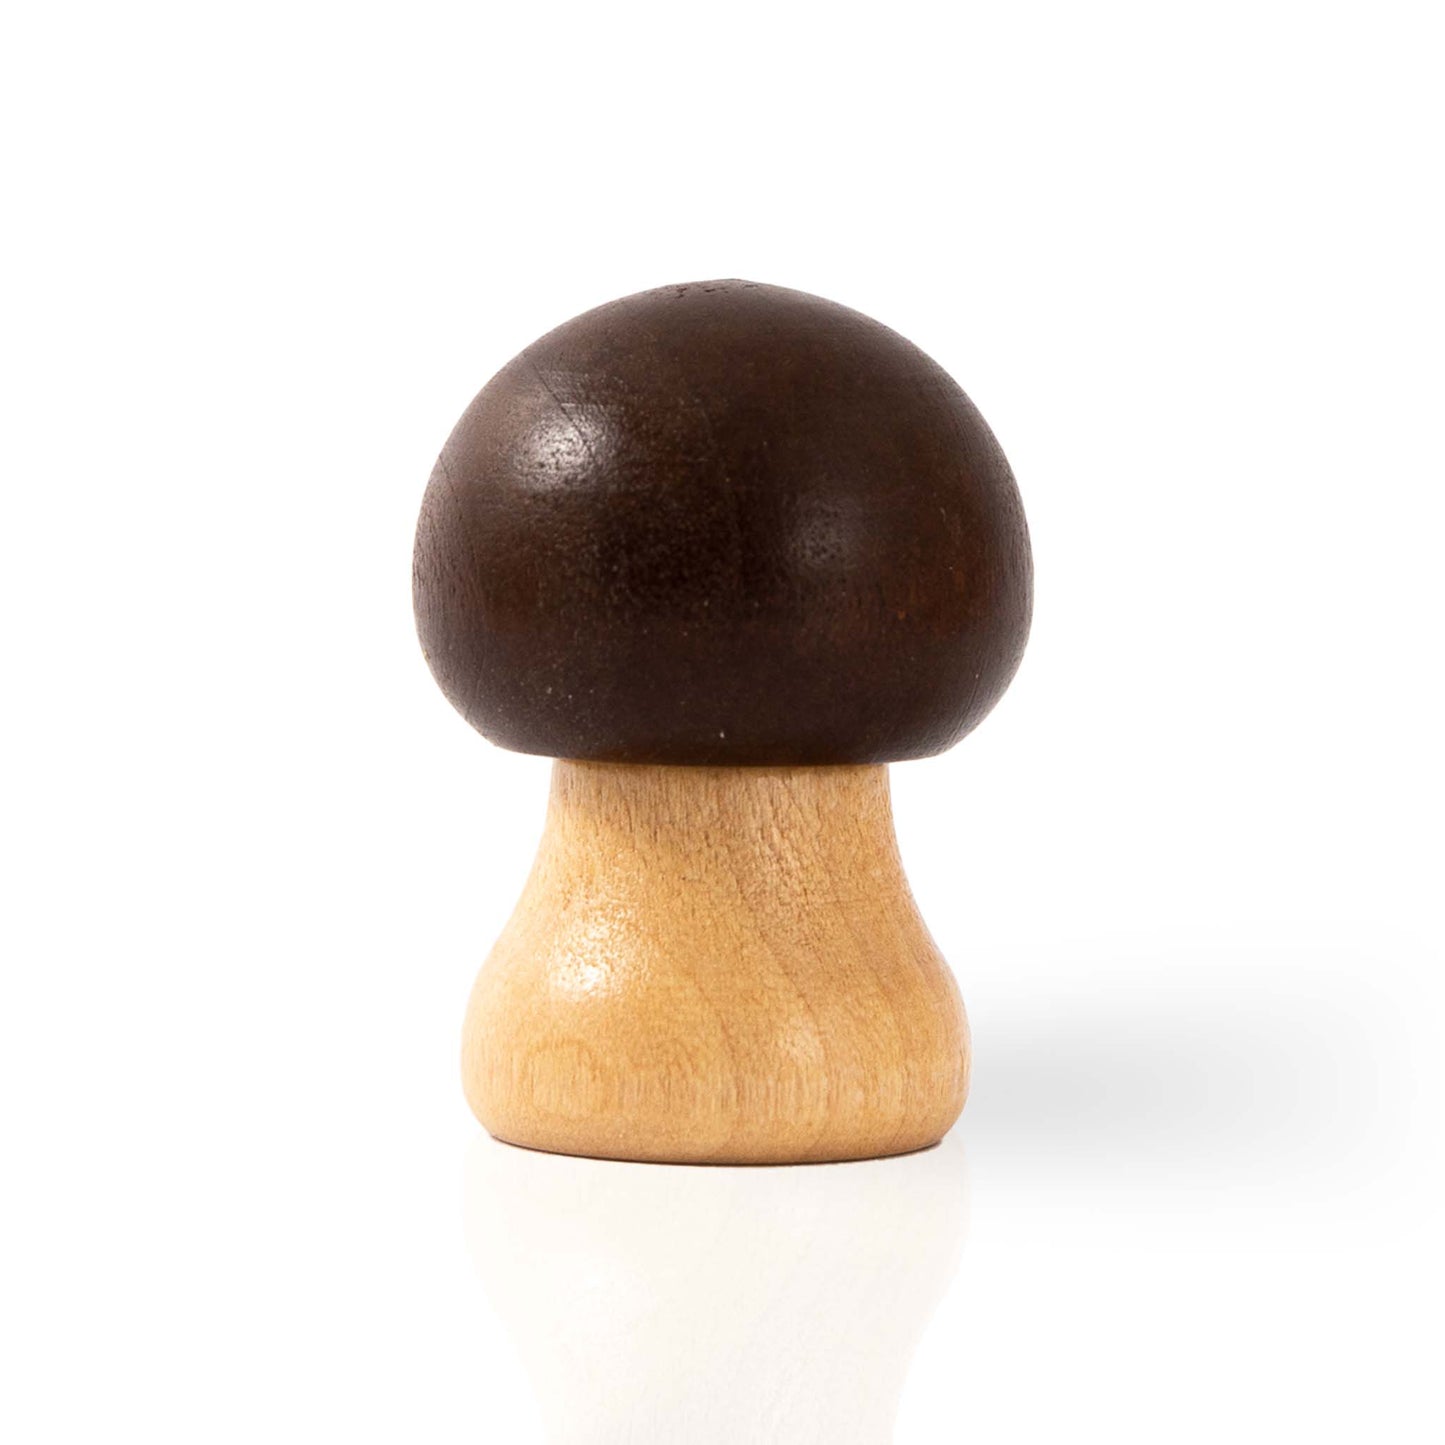 Wooden Card Note Holder - Brown Mushroom